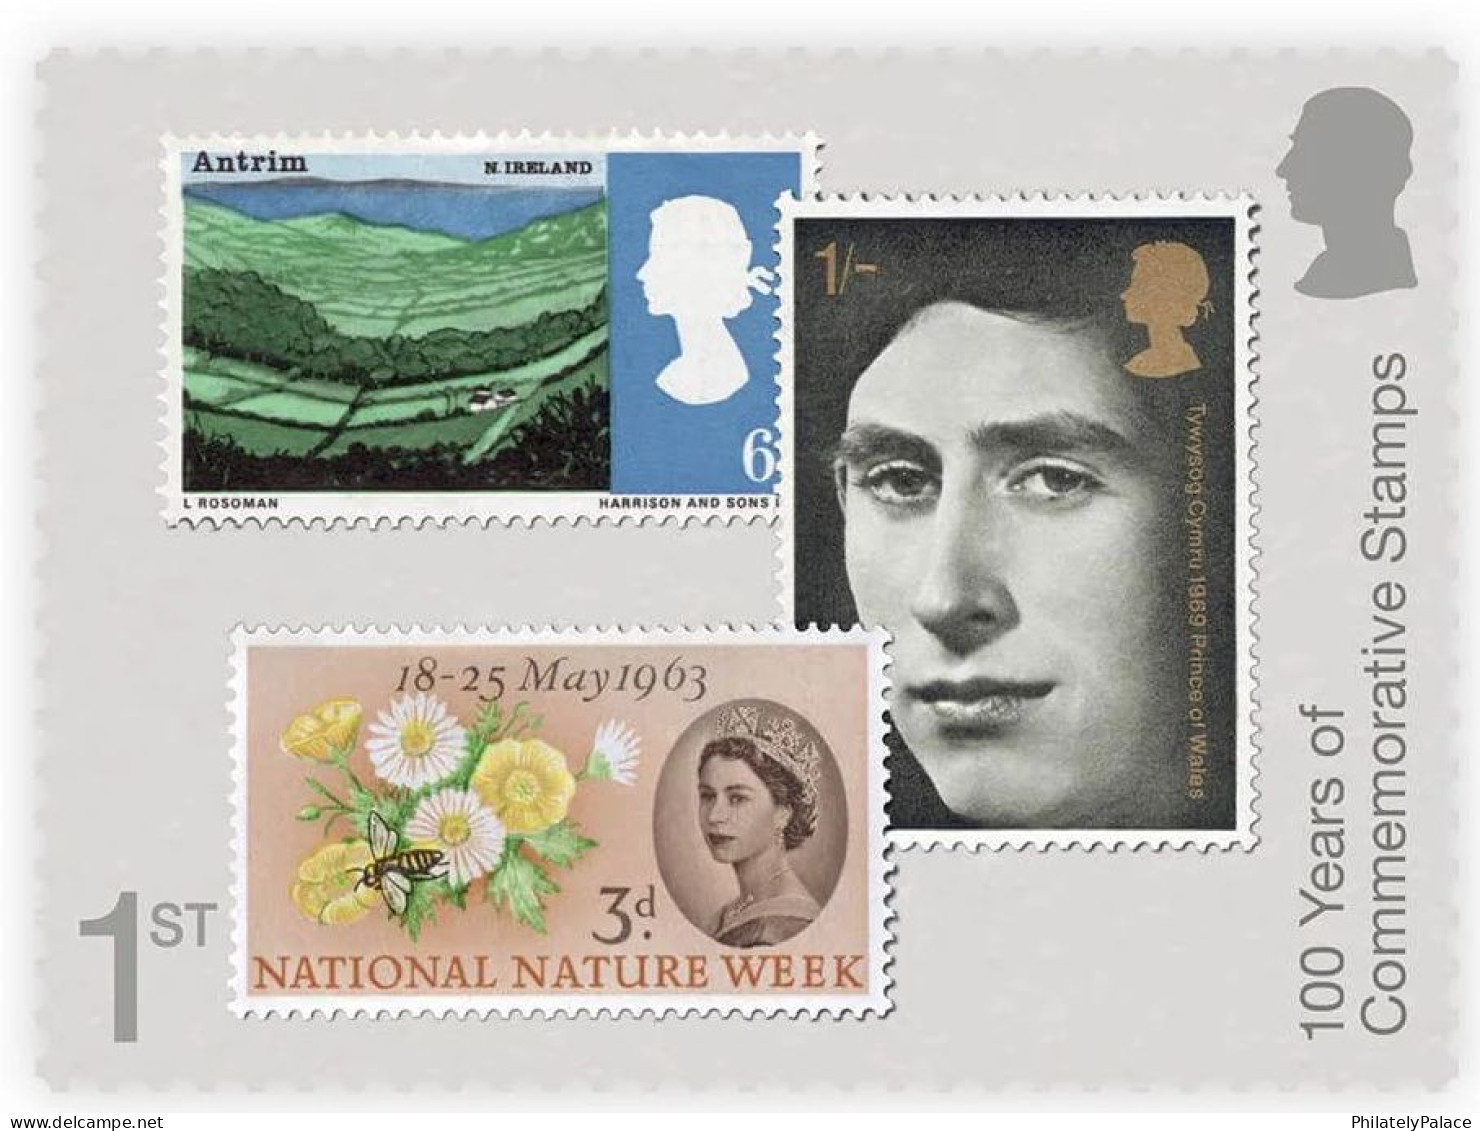 Great Britain (UK) New 2024 ,Stamp On Stamp, Lion,Queen,Butterfly,Flower,Music,Architecture, Set Of 10, MNH (**) - Ungebraucht